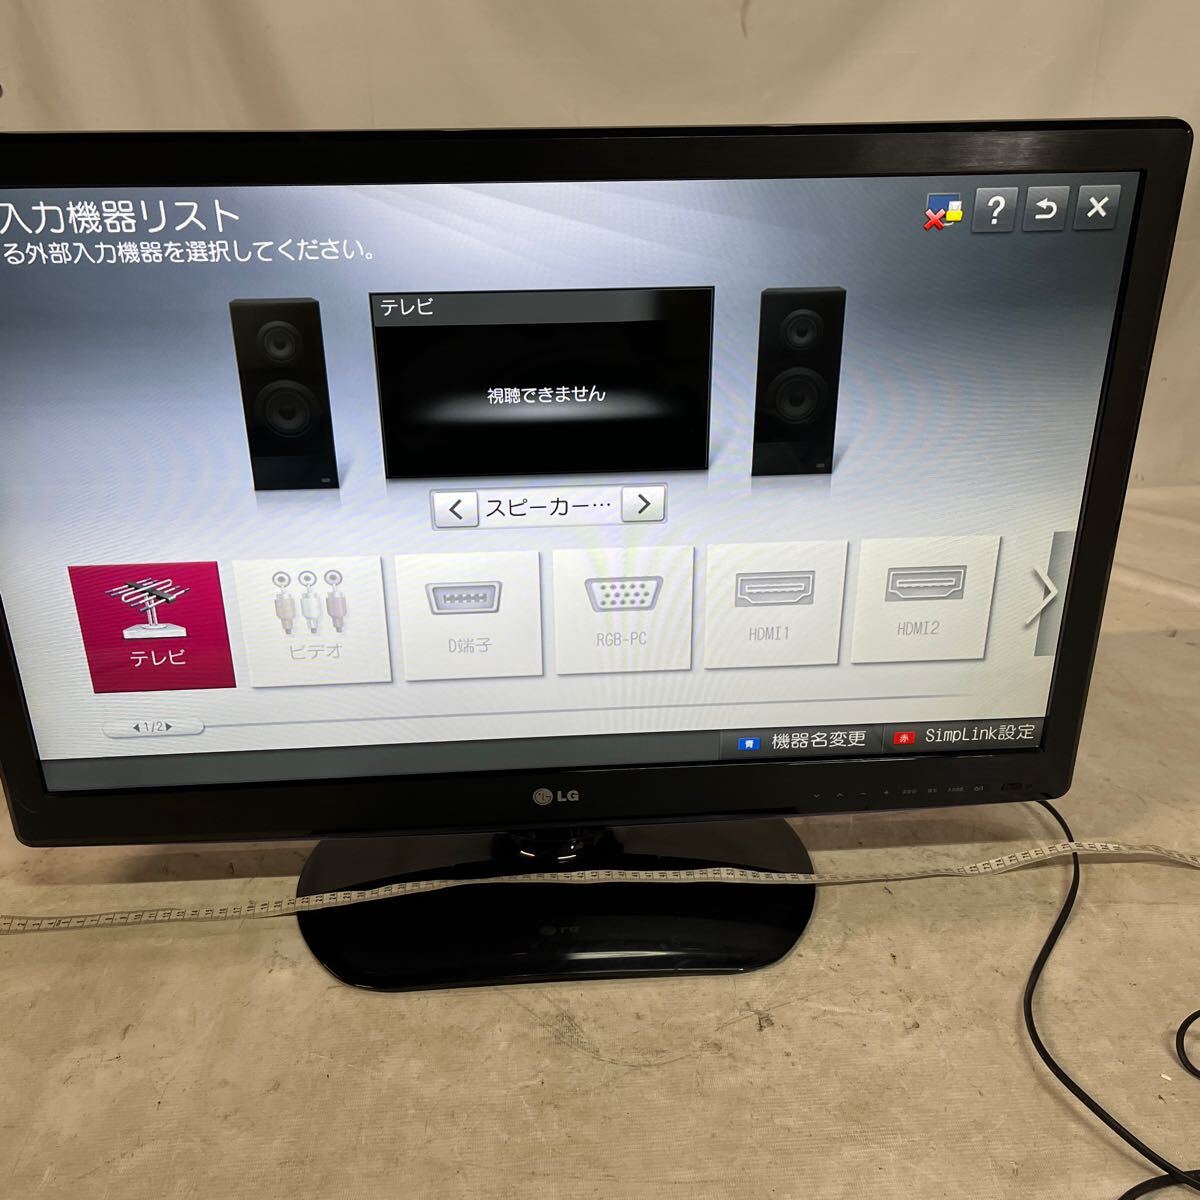 [Junk] LG LED LCD Color TV. 32LS3500-JB. 32 Тип. Сделано в 2013 году, без пульта дистанционного управления